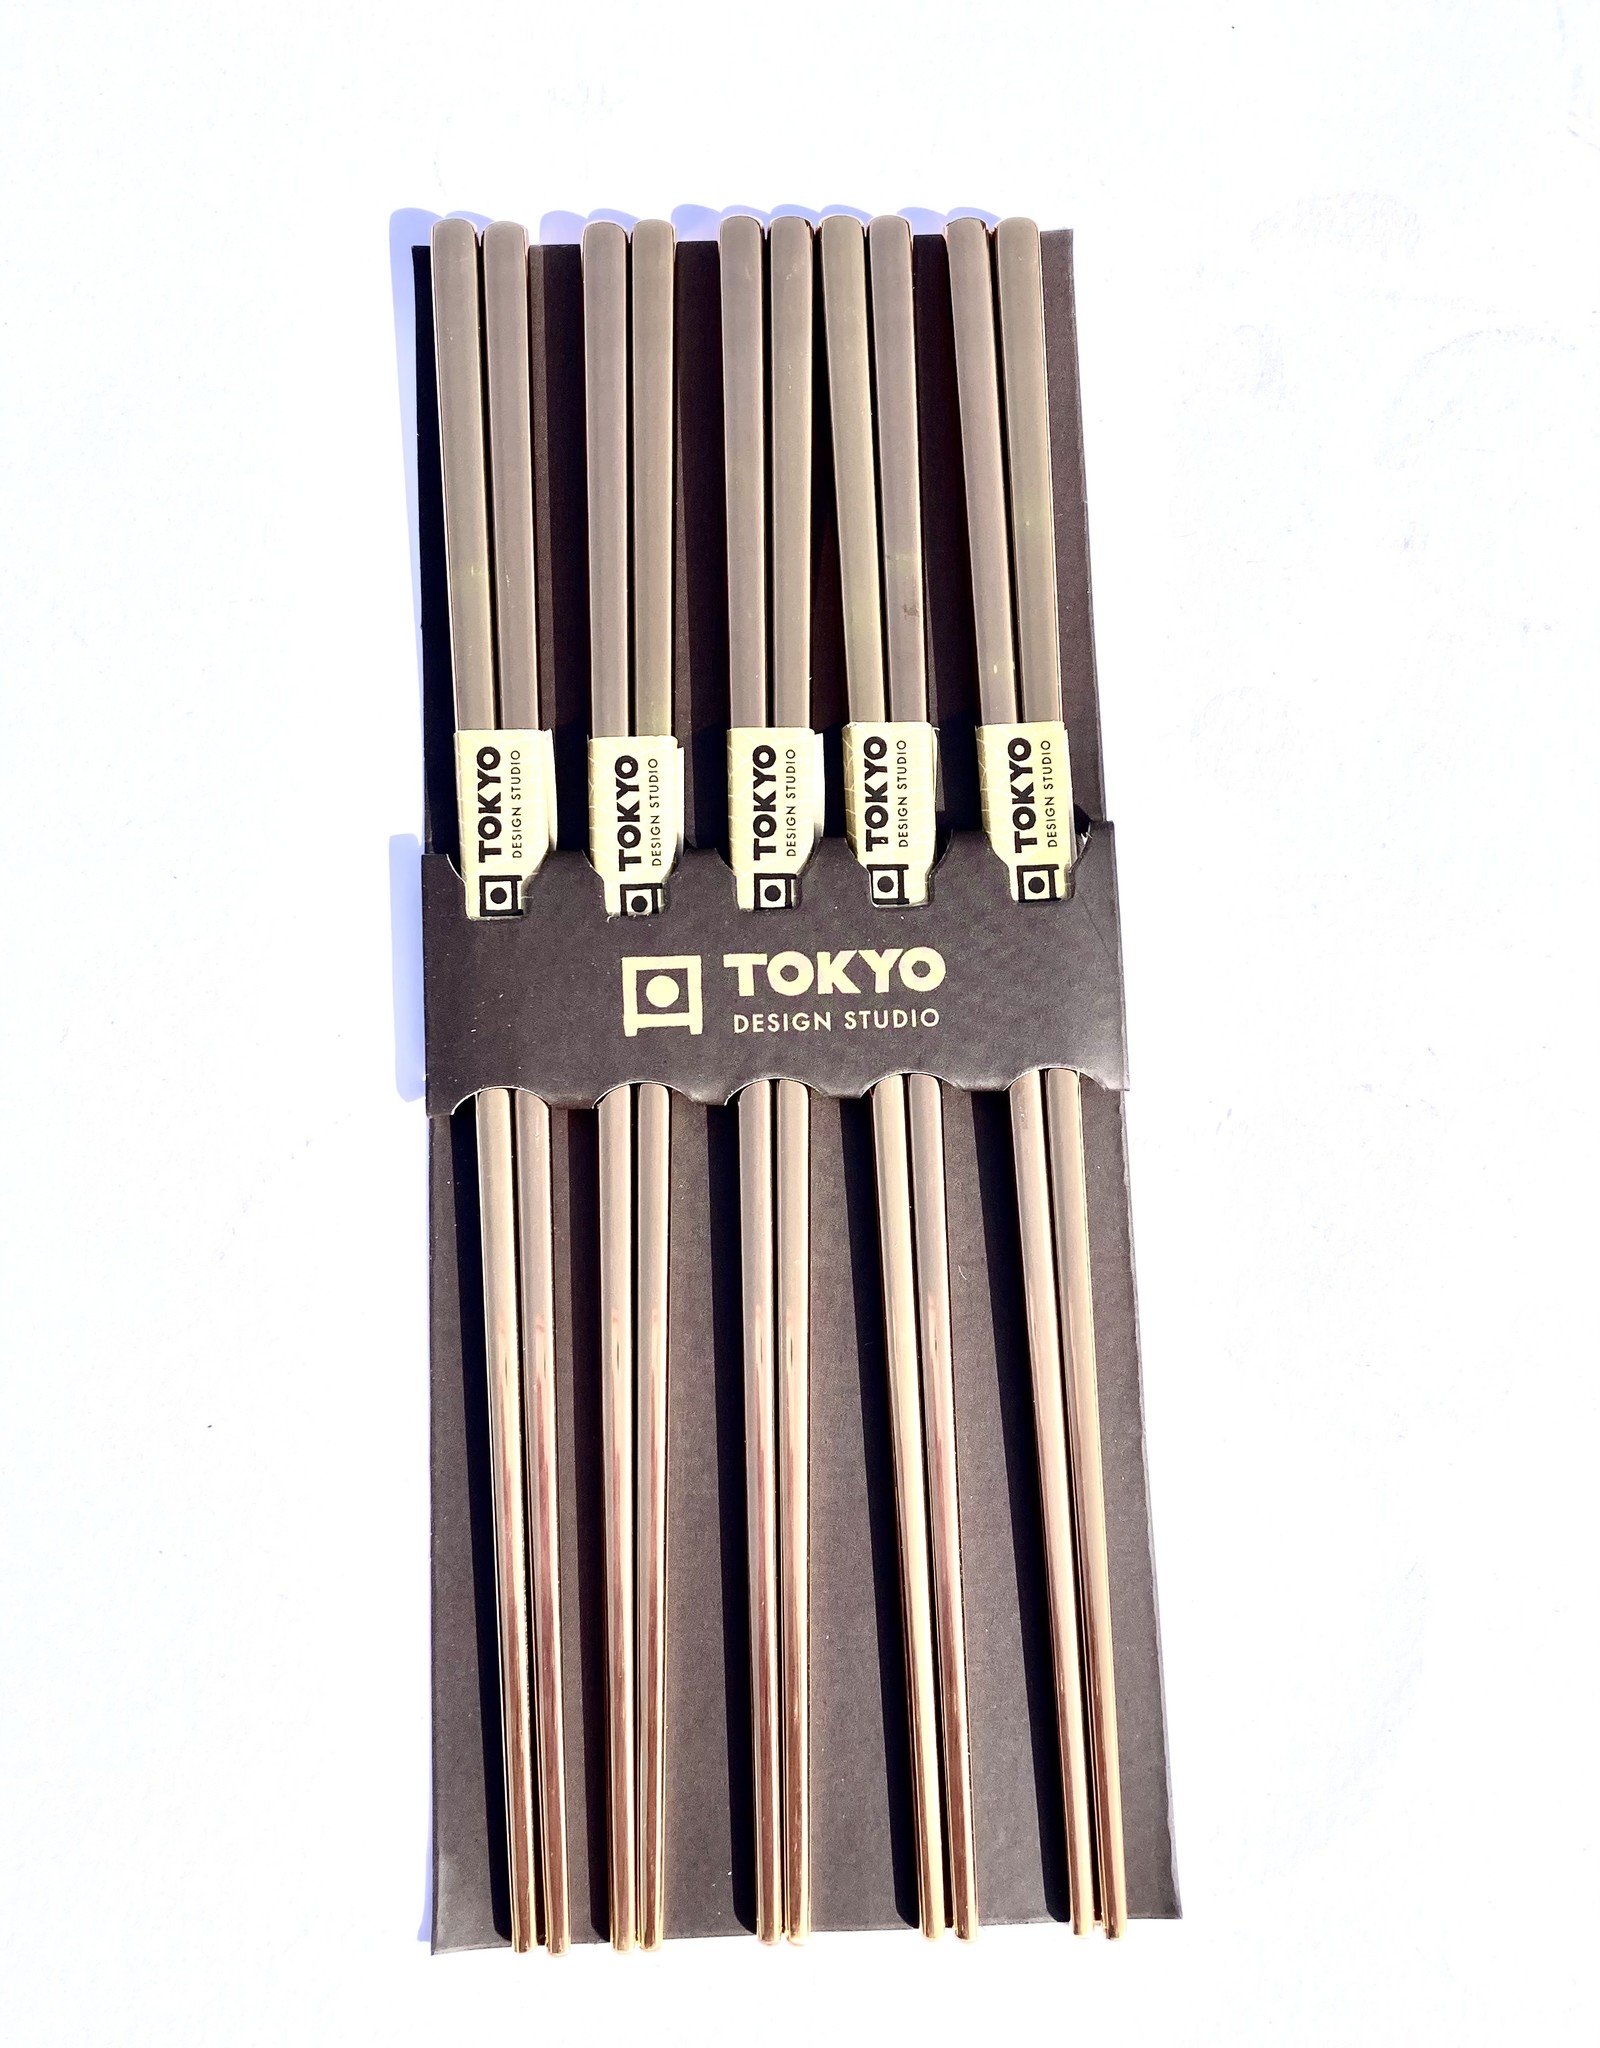 Tokyo Design Studio Tokyo Design Studio Japanese gold chopsticks (stainless steel)